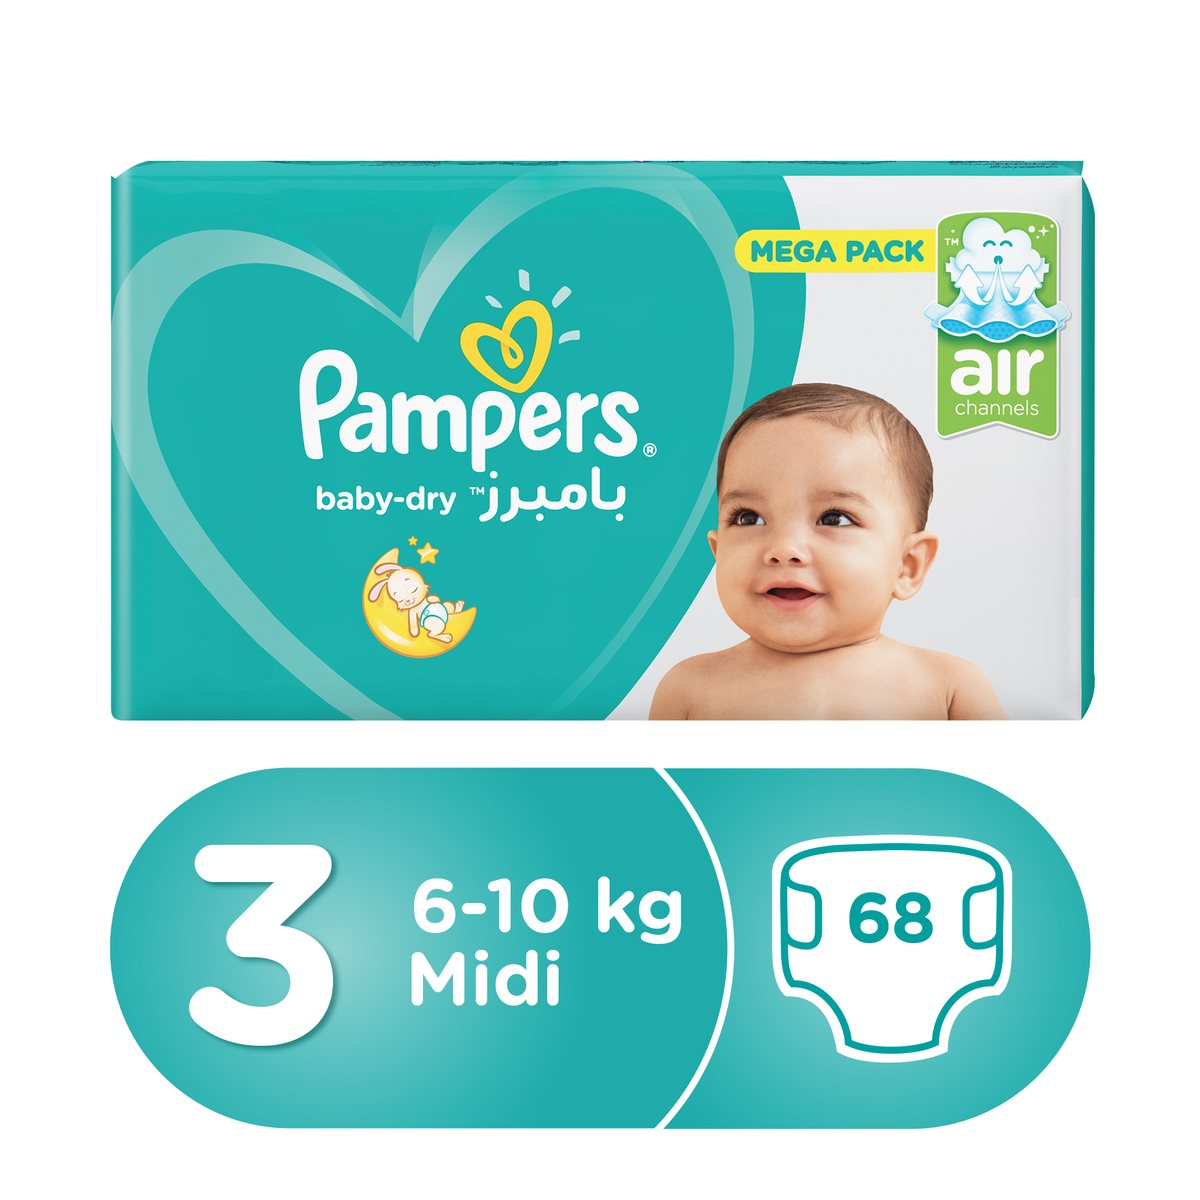 Pampers Active Dry Diapers, Size Midi, 6 -10kg Mega Pack, 68pcs price in UAE | UAE | supermarket kanbkam